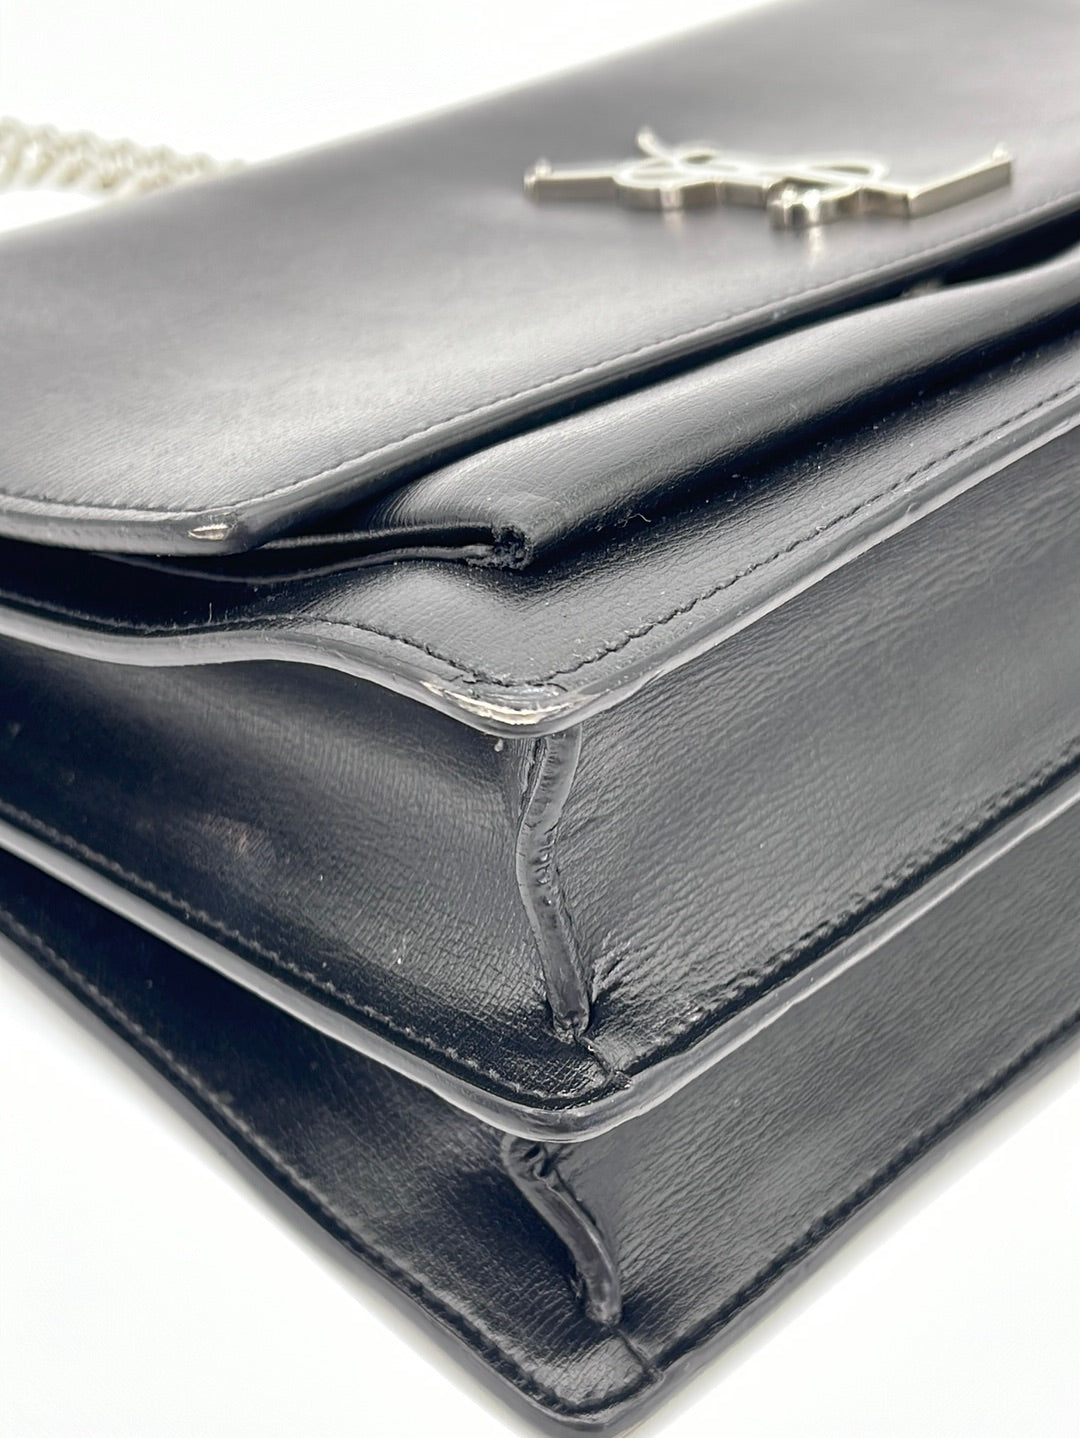 Leather crossbody bag Yves Saint Laurent Black in Leather - 26191169